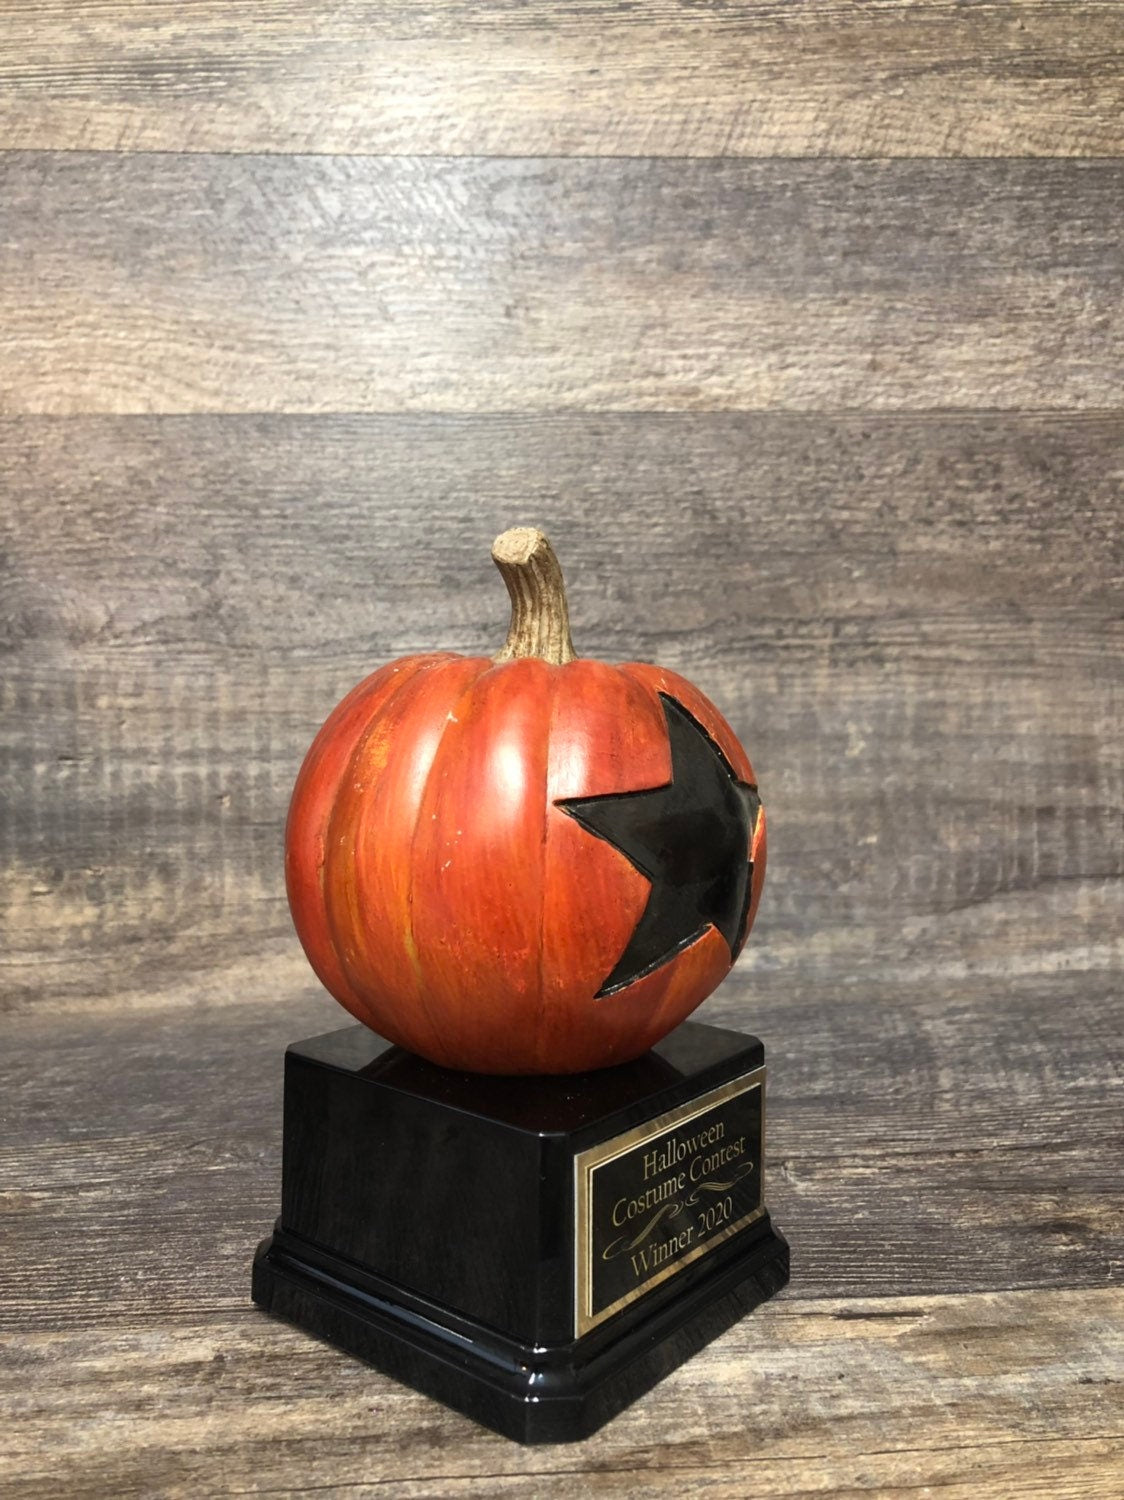 Halloween Trophy Pumpkin Carving Contest Pumpkin with Black Star Halloween Costume Contest Jack O Lantern Trophy Trunk or Treat Winner